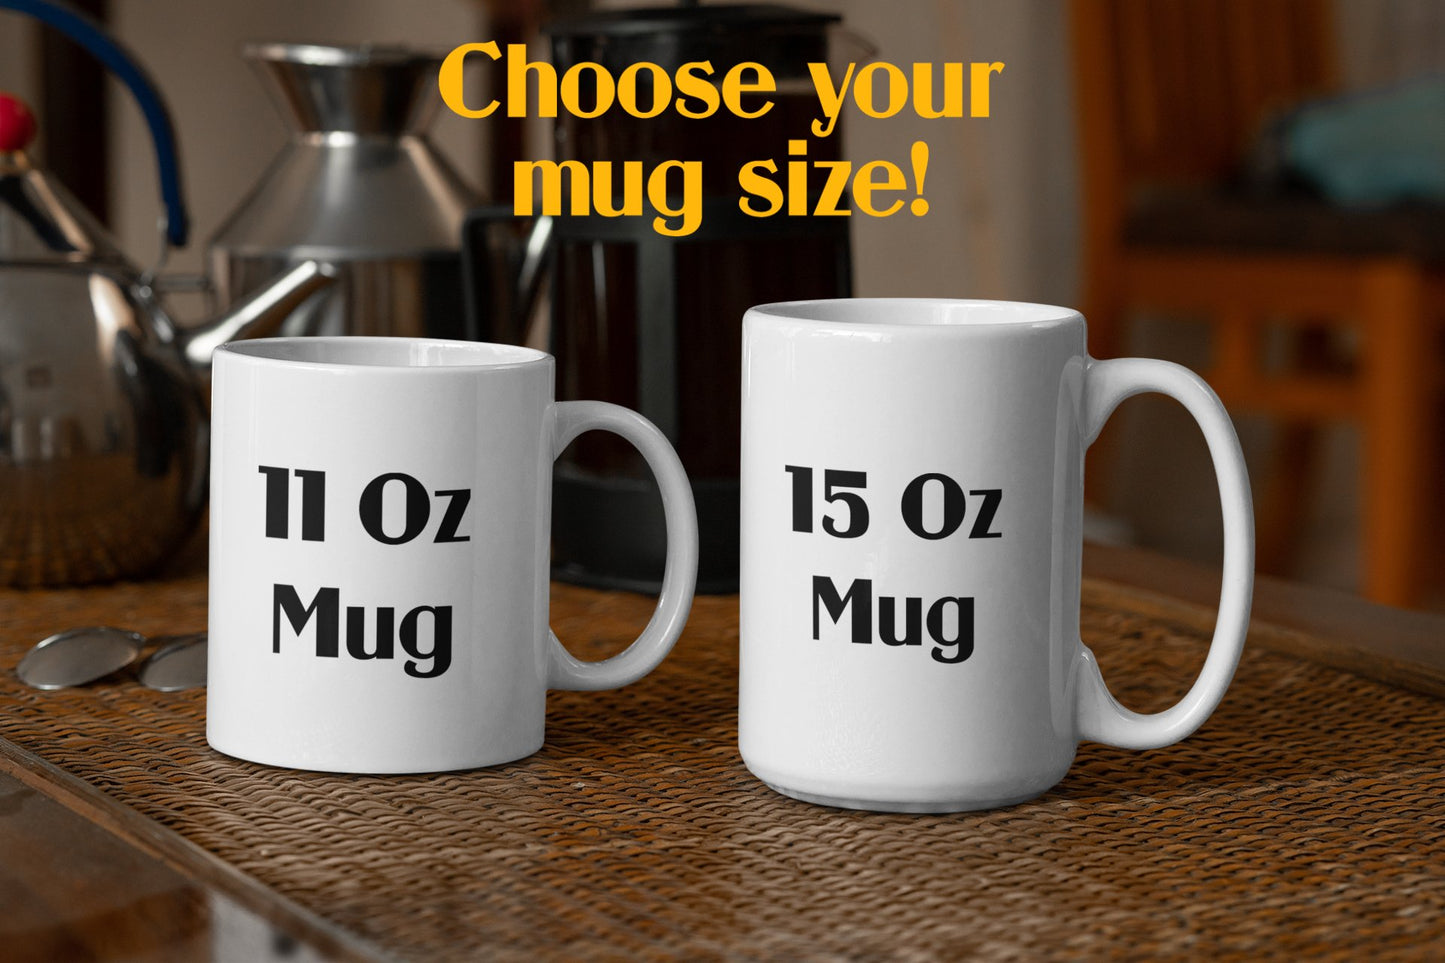 Don't Fucking Care Bear Mug Choice of 11 oz or 15 oz - SBS T Shop